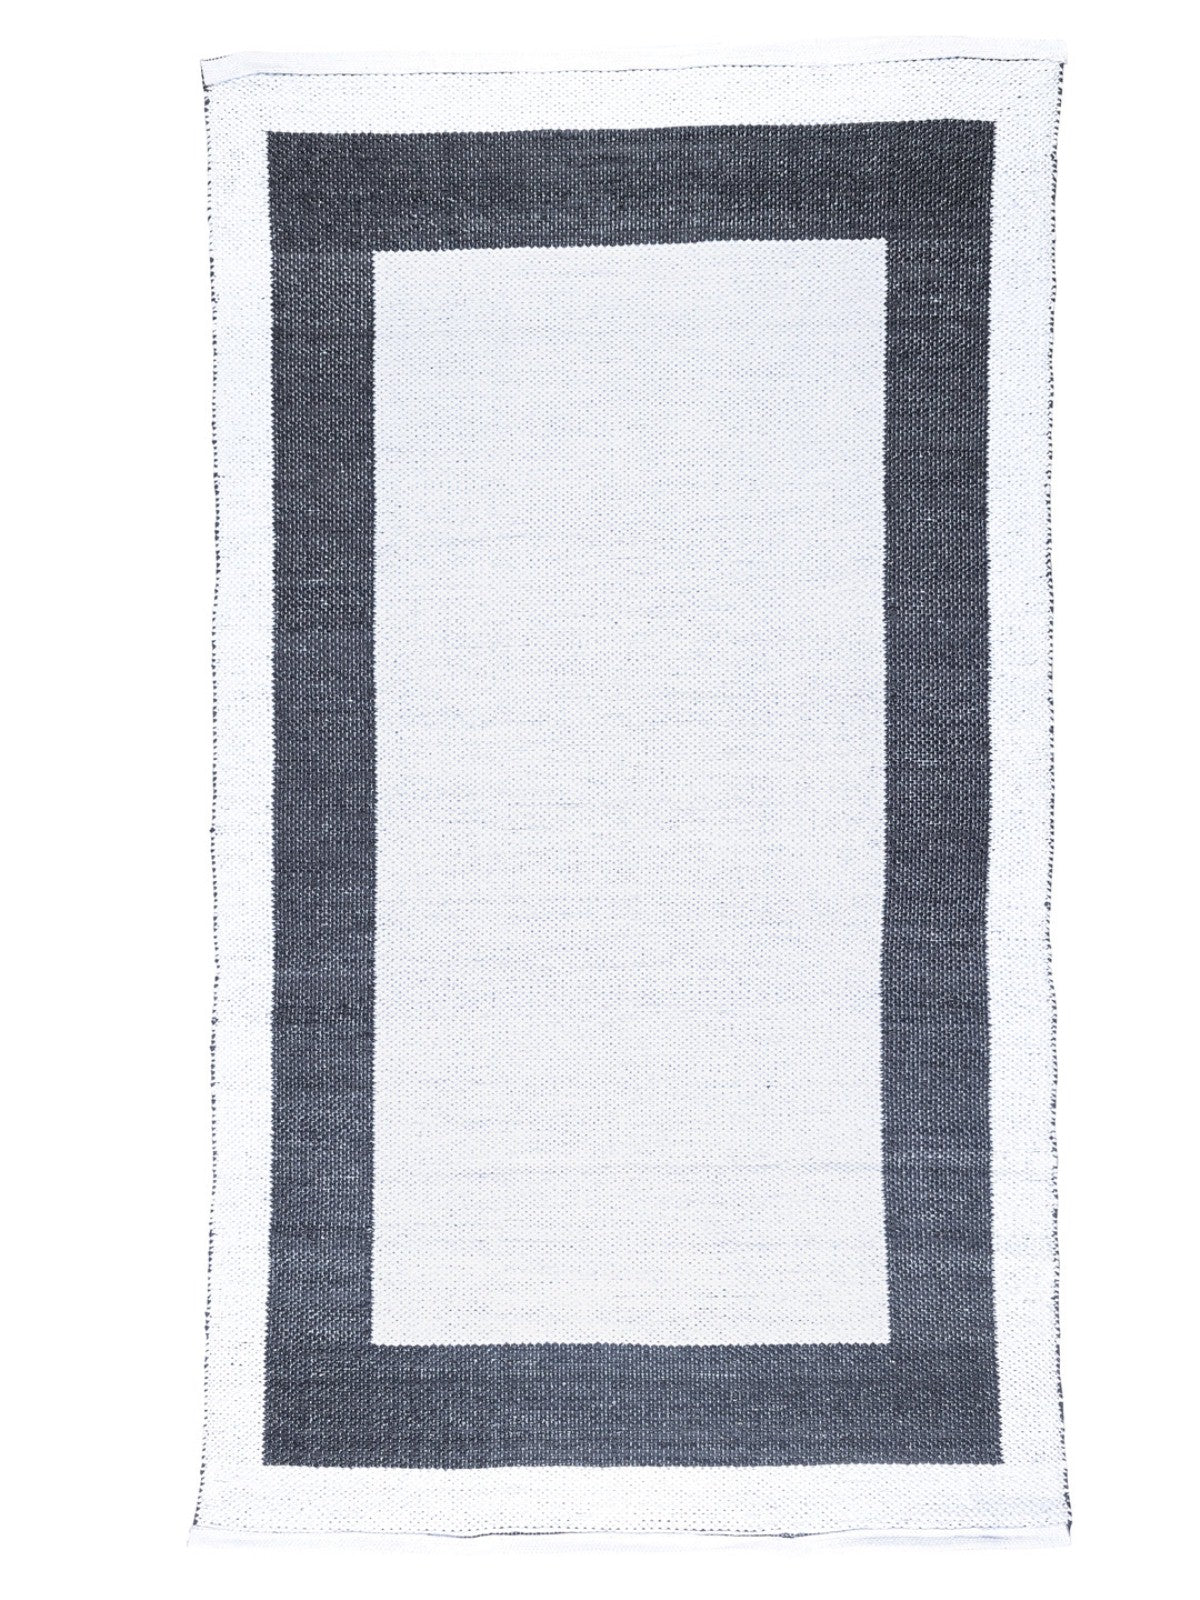 Black & White Geometric Anti-Skid Carpet/Rug